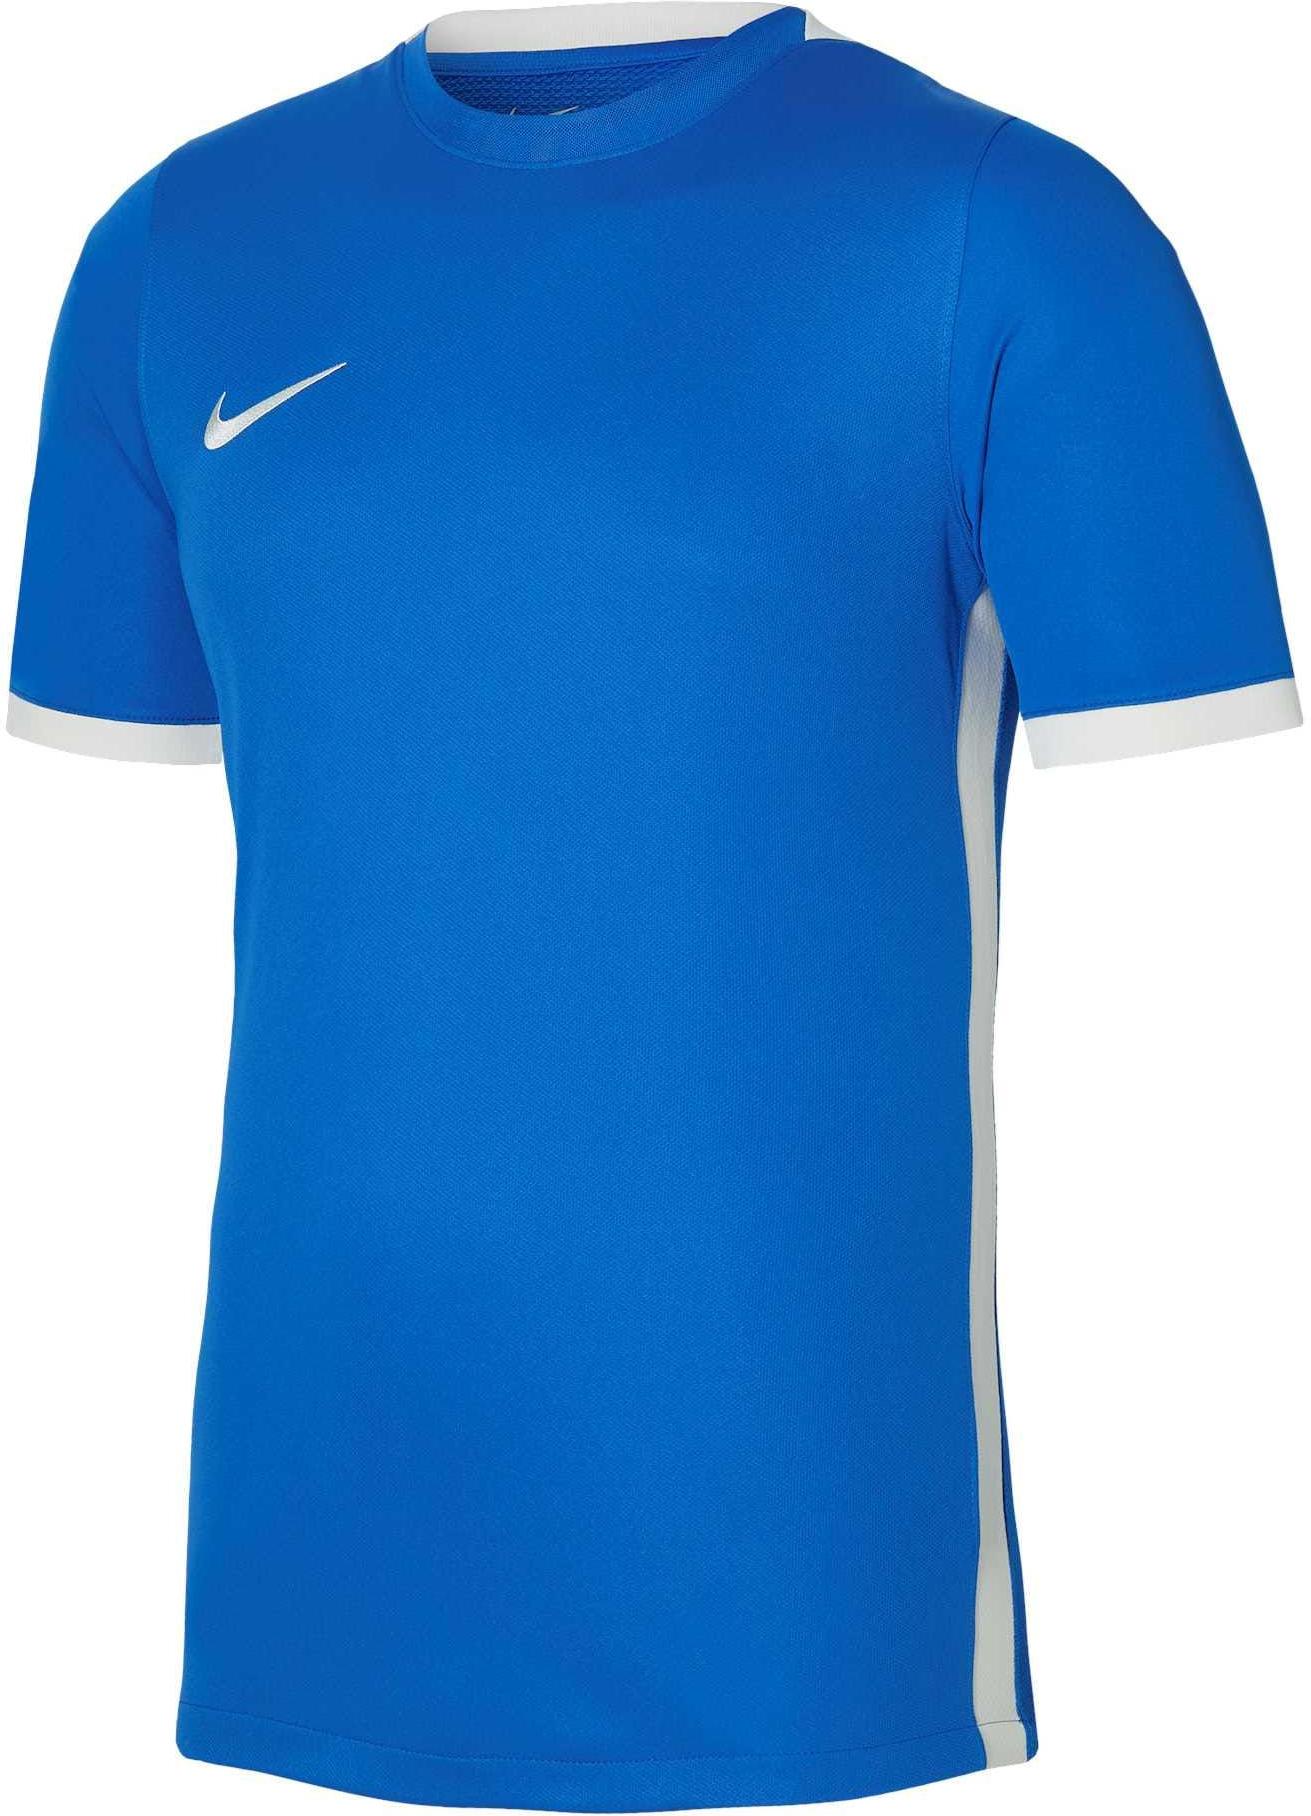 Риза Nike Dri-FIT Challenge 4 Men s Soccer Jersey